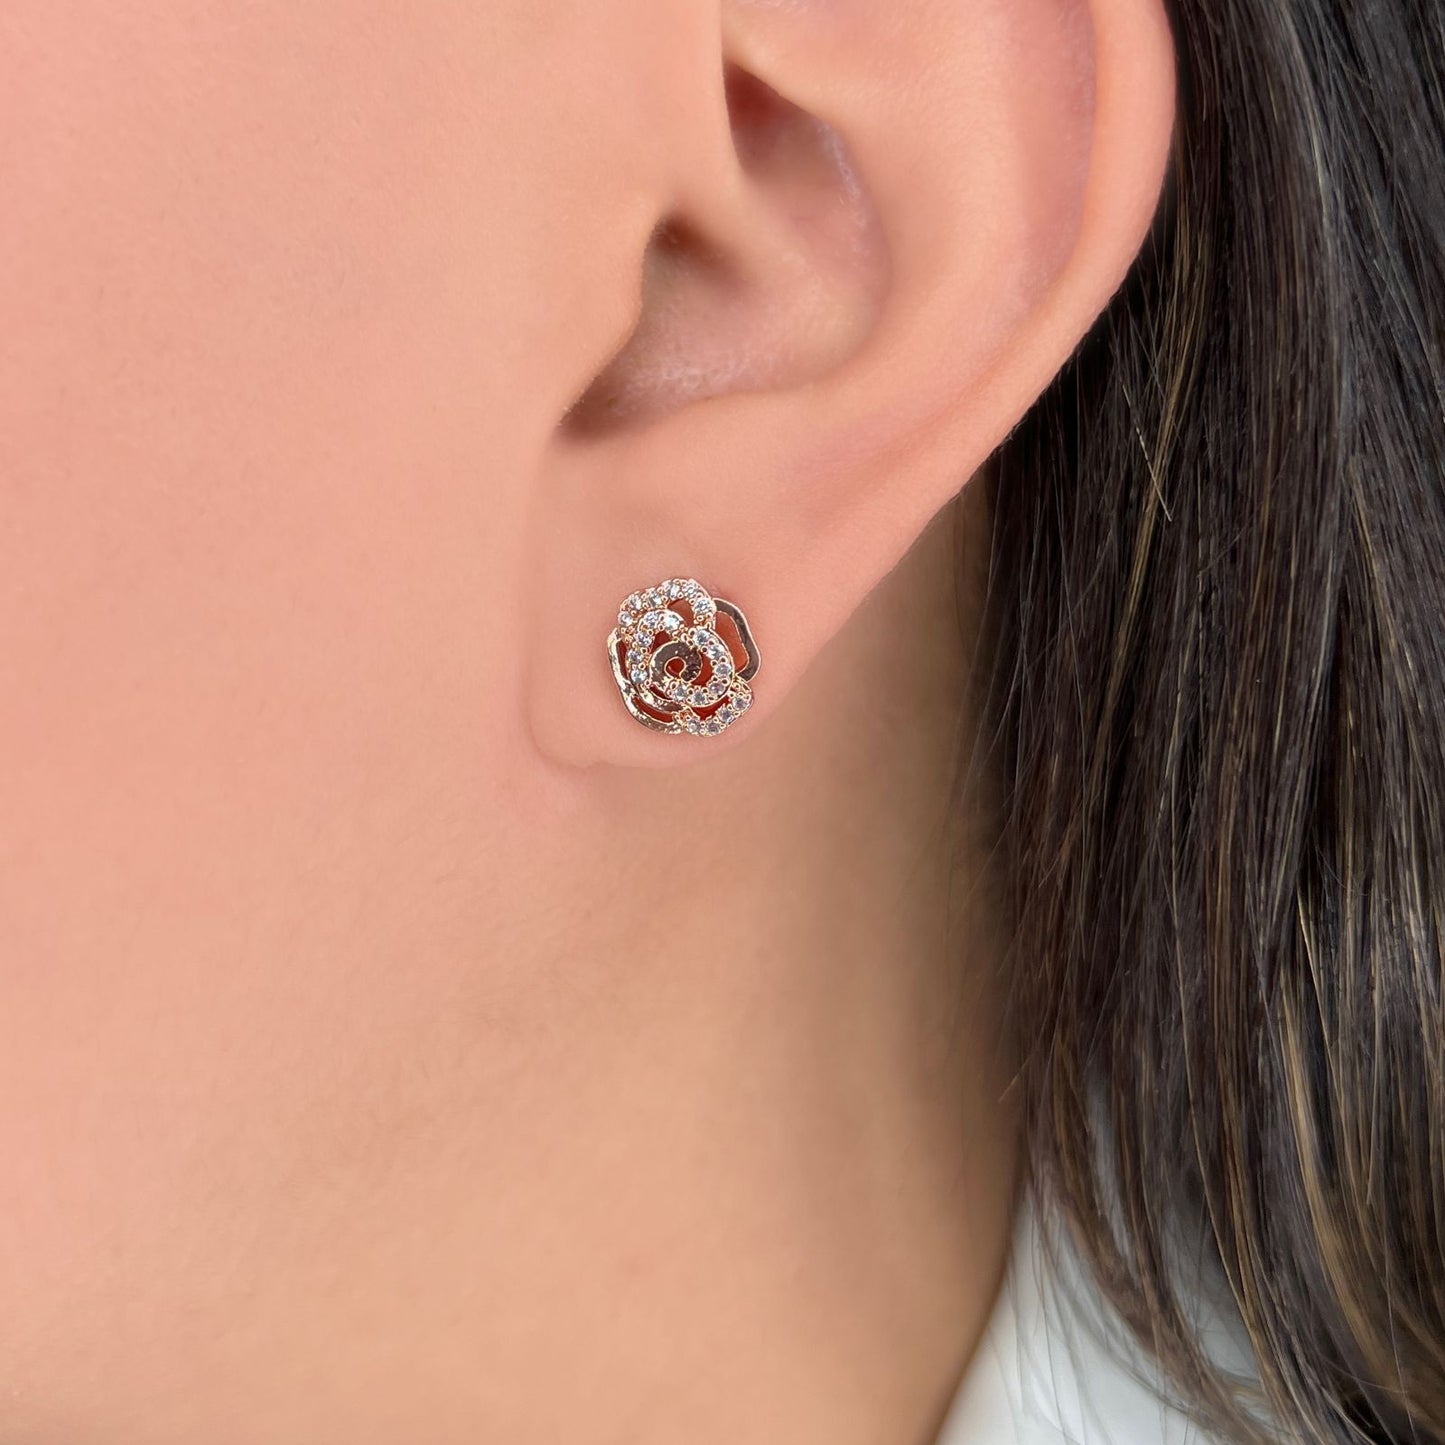 Flower earring with zircons (858)